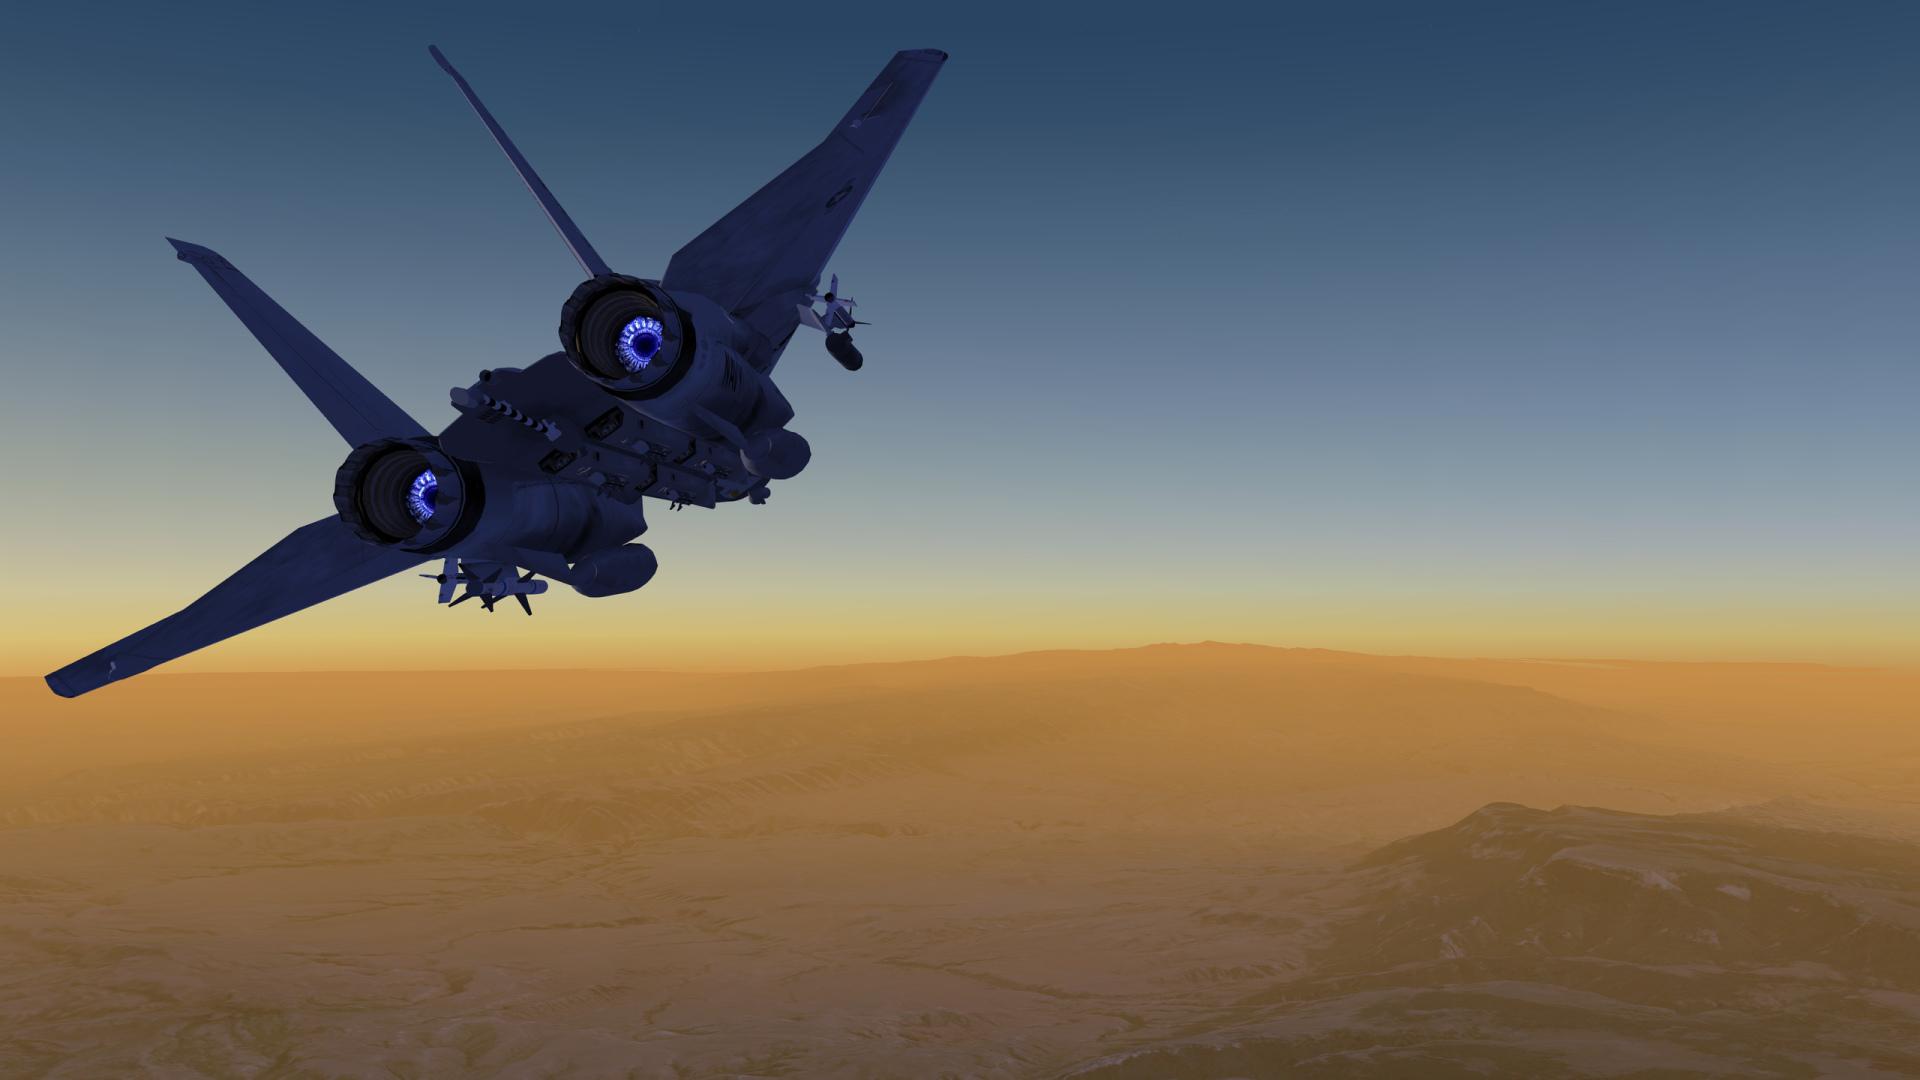 Microsoft Flight Simulator at 1280 x 960 size wallpapers HD quality